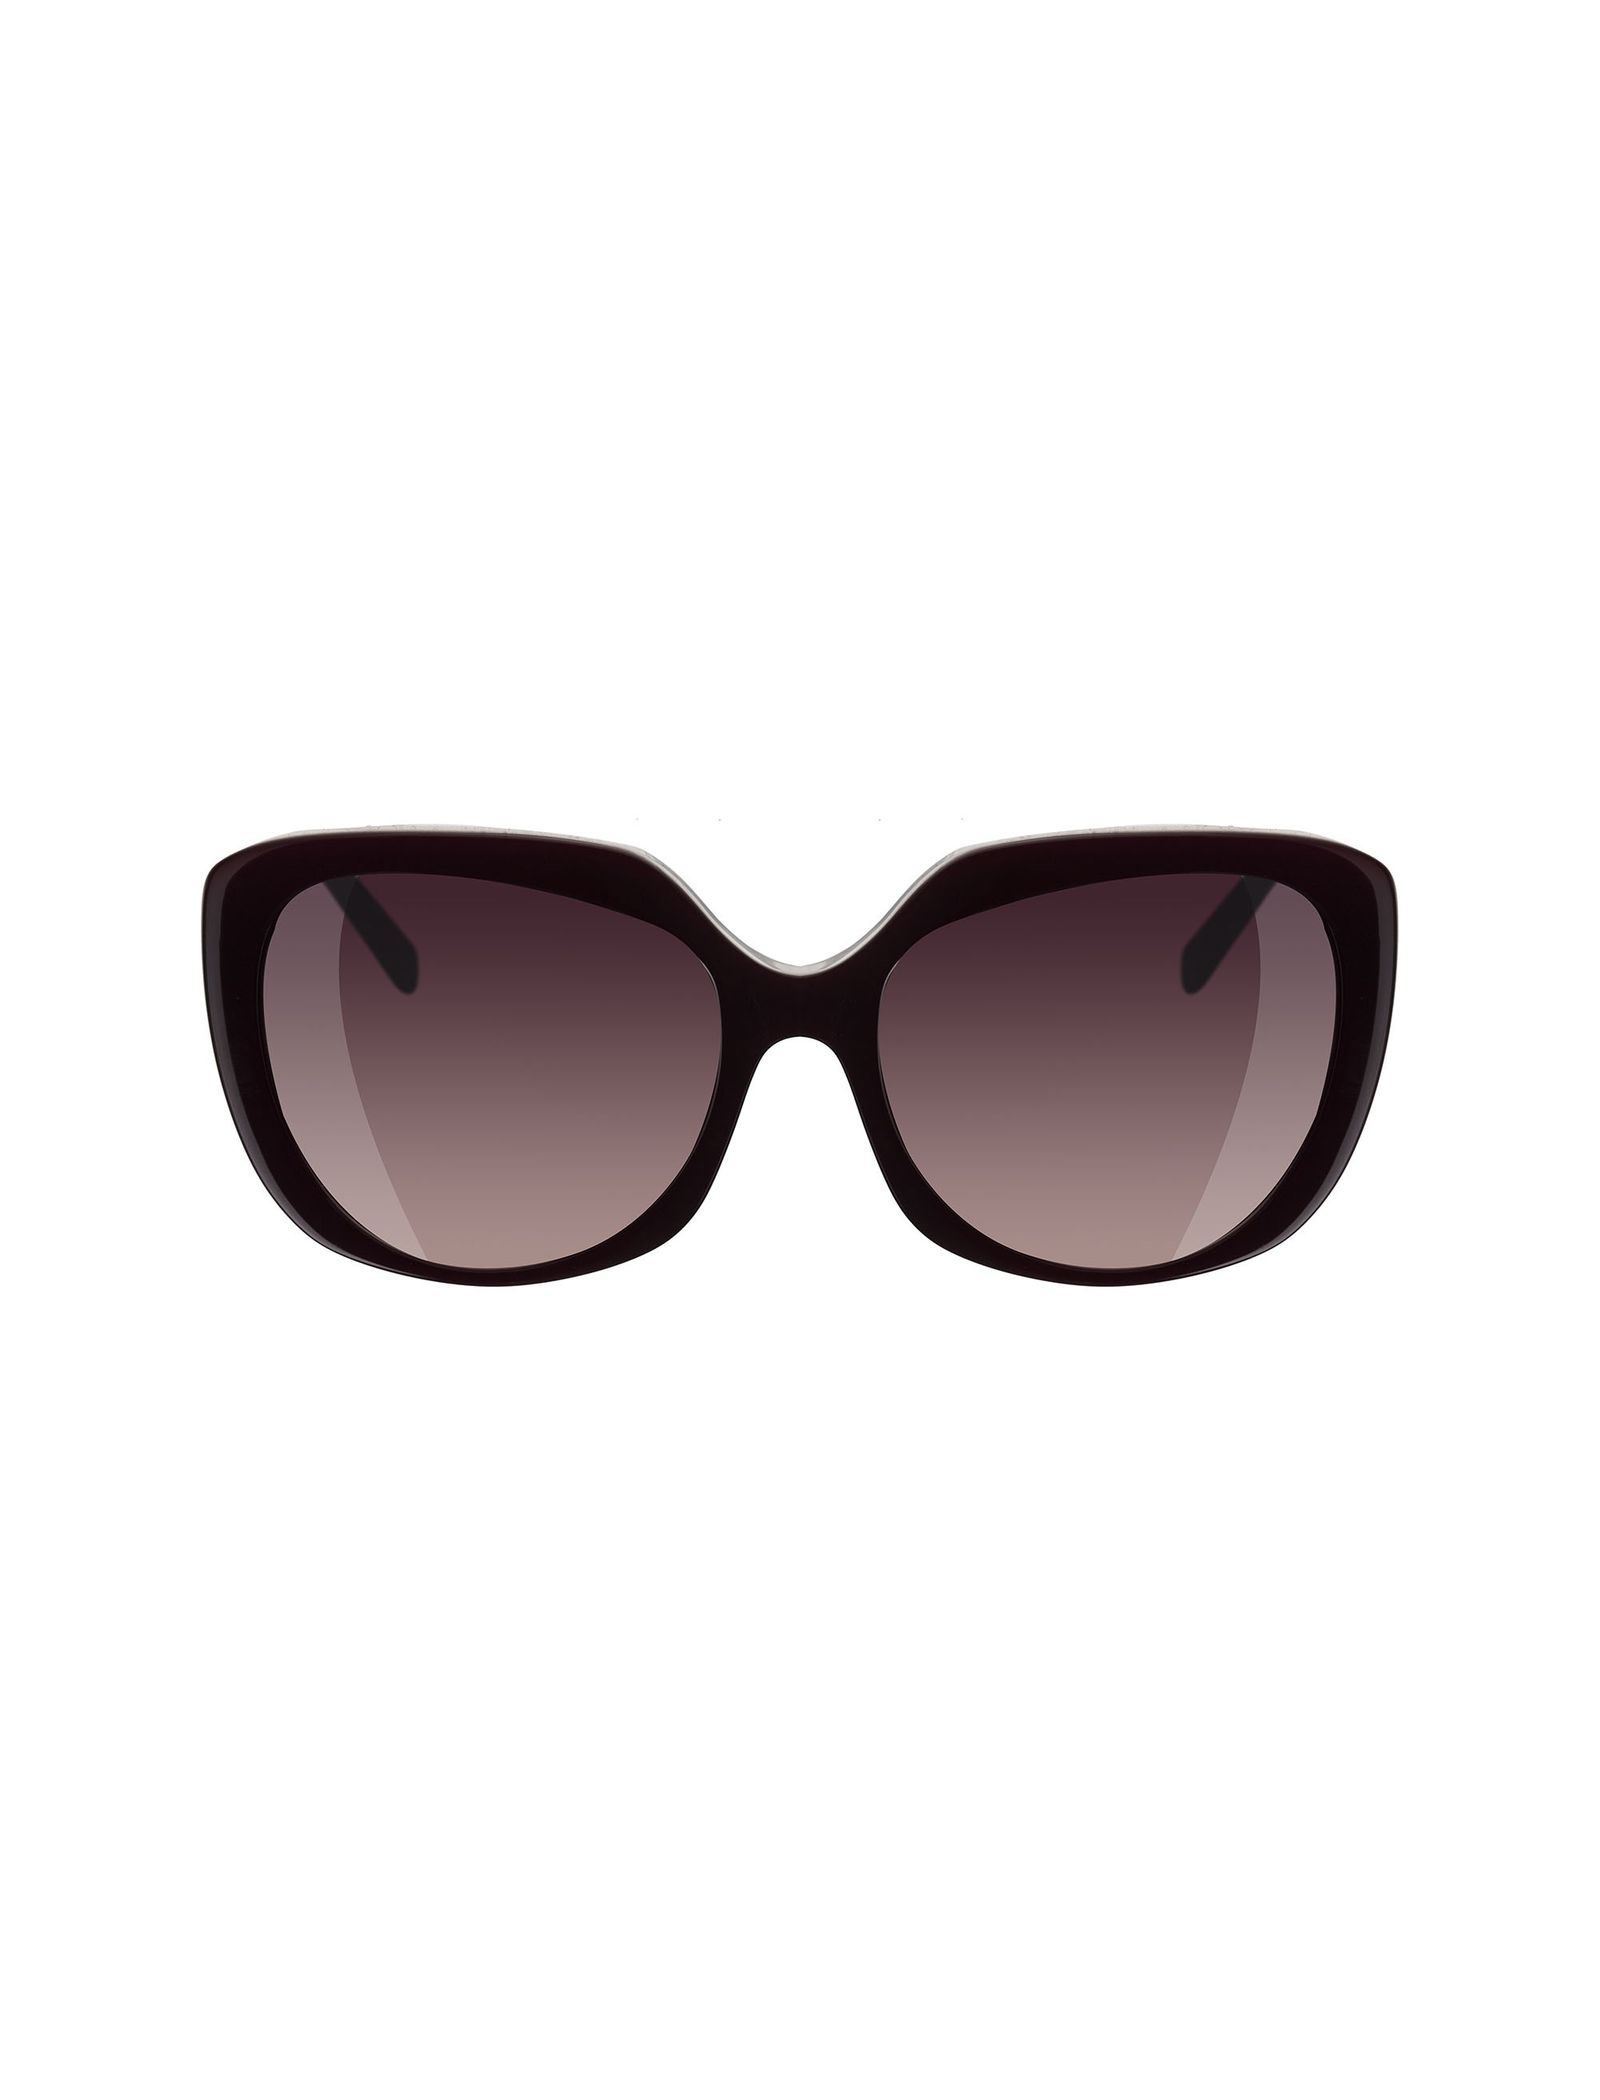 عینک آفتابی مربعی زنانه - ماریم اکو - بادمجاني - 2